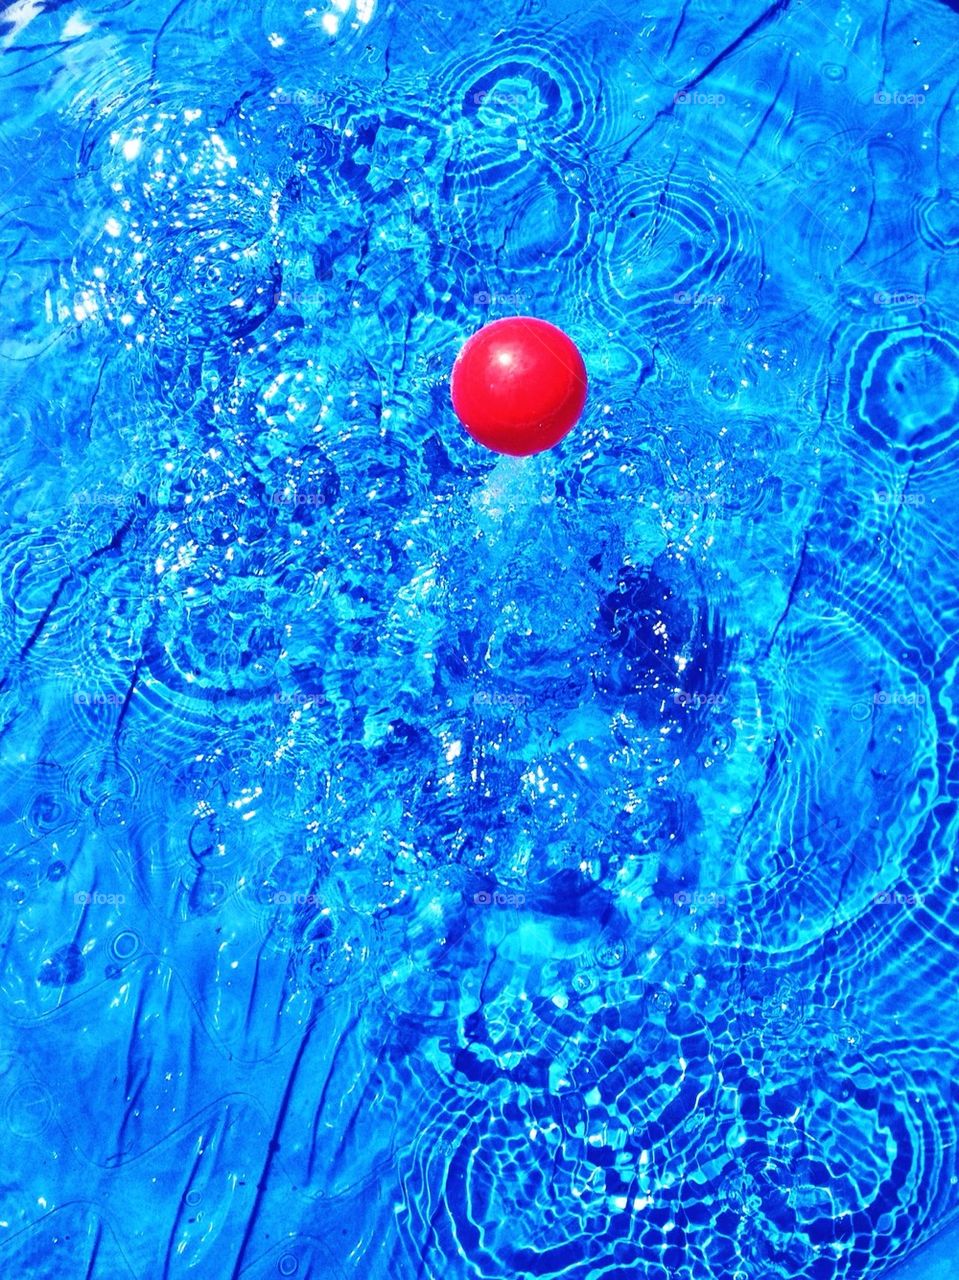 blue red water ball by hannahdagogo